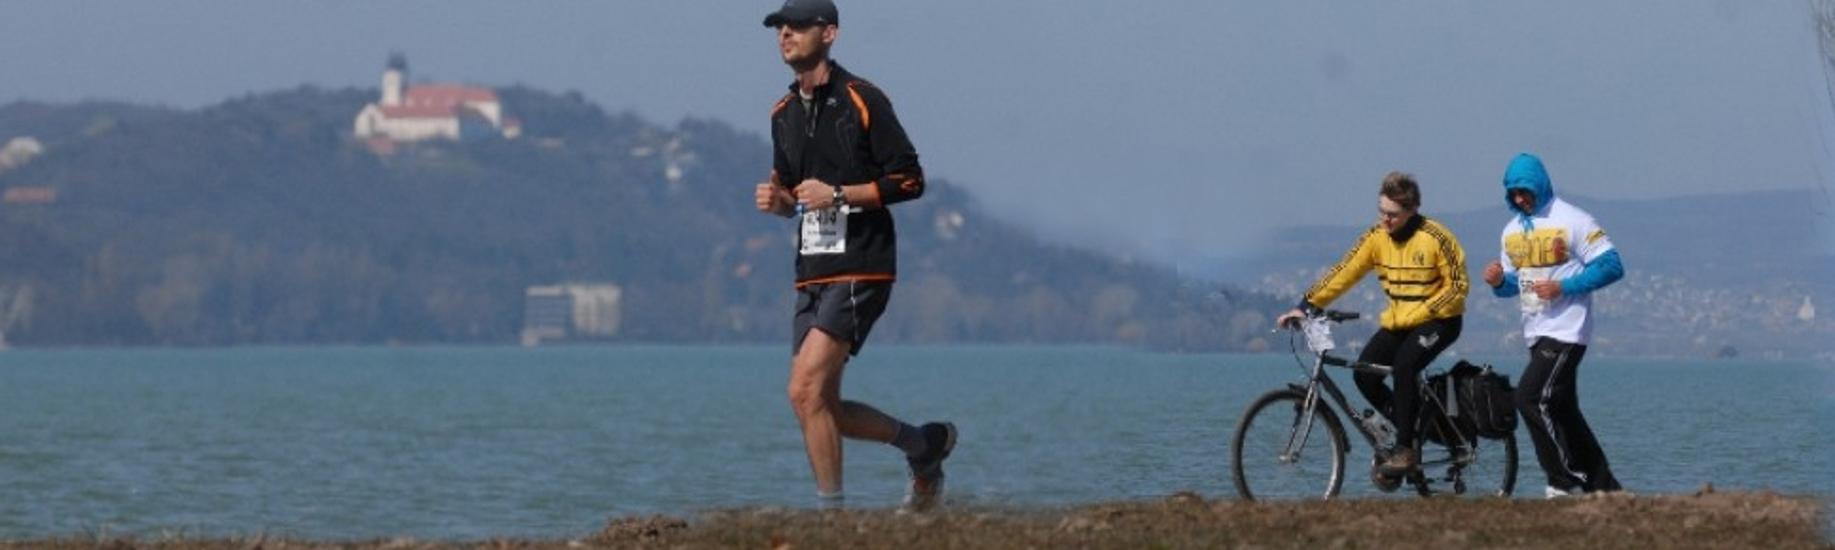 8. Lake Balaton Supermarathon, 19 March 2015 - 22 March 2015